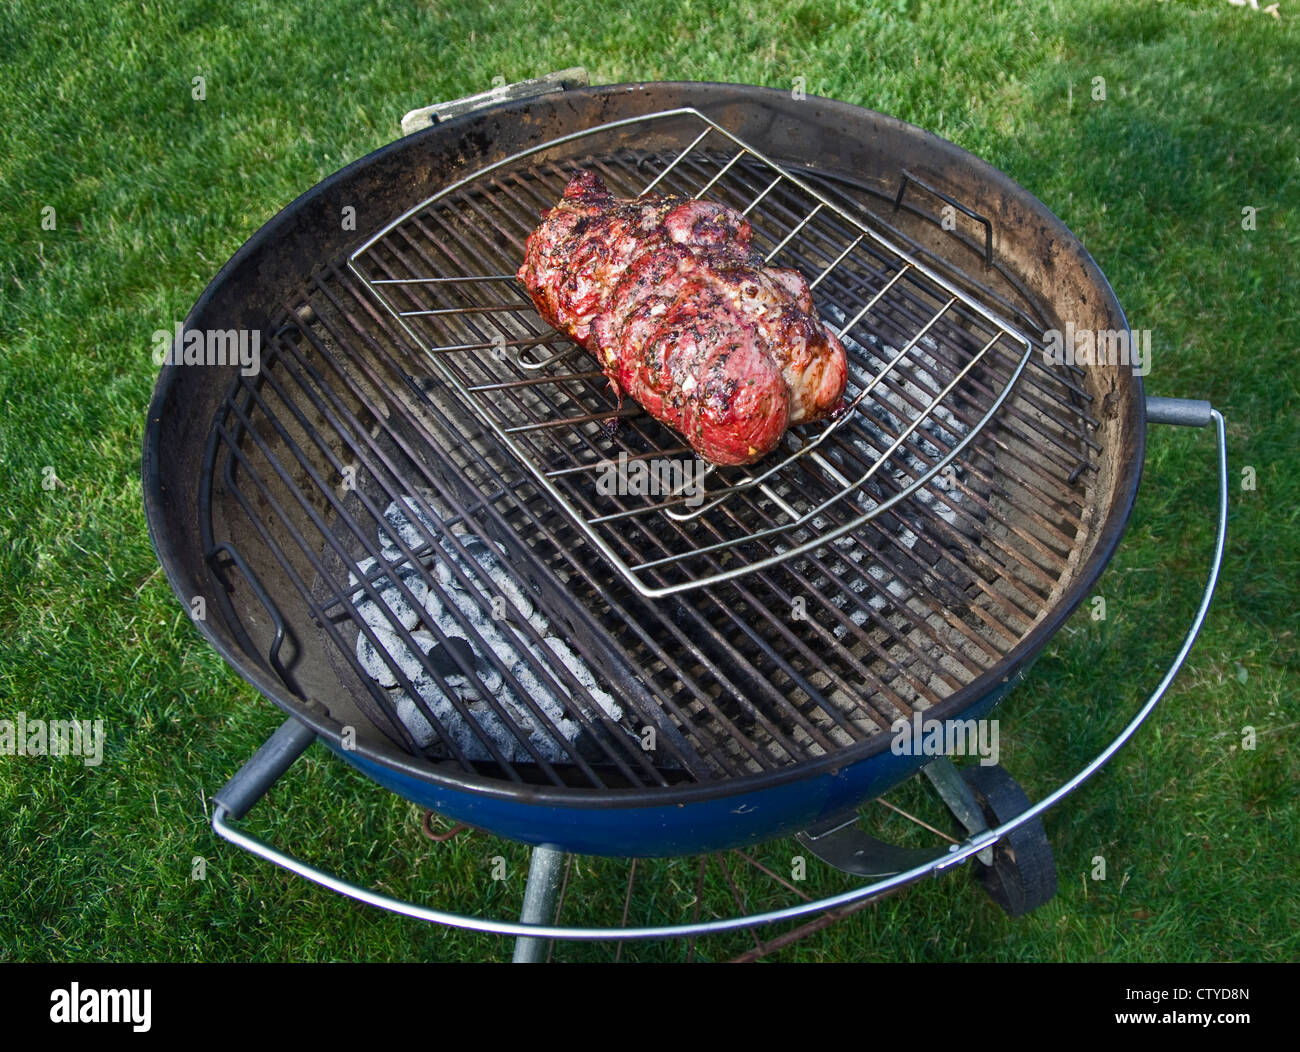 Seasoned boneless leg of lamb on charcoal barbecue using a roasting rack  Stock Photo - Alamy